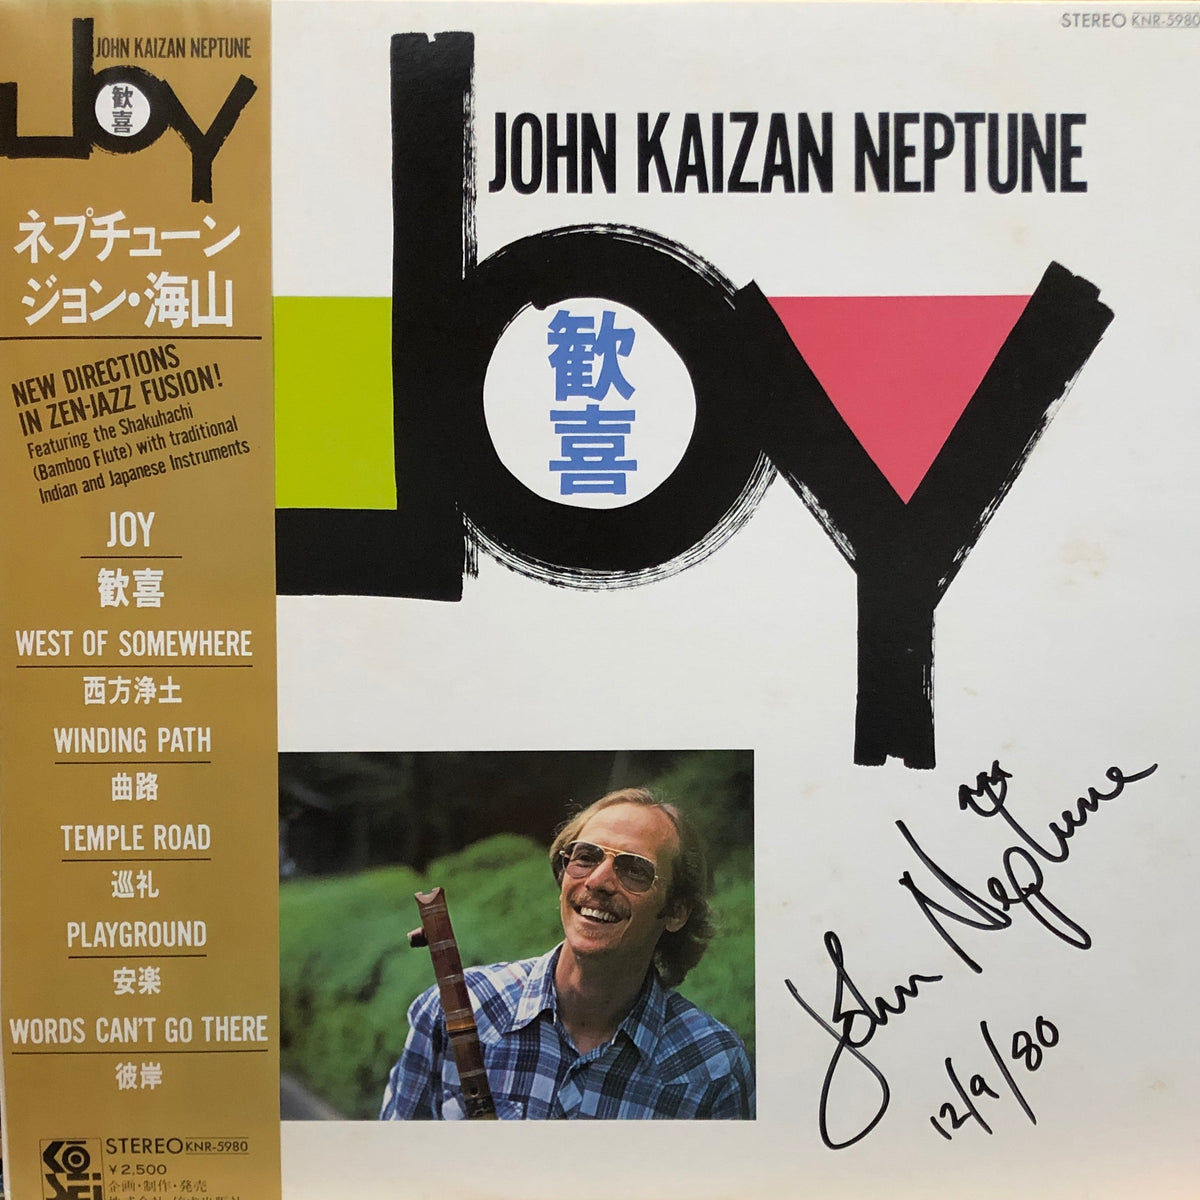 John Kaizan Neptune “Joy” - smkn4lebong.sch.id